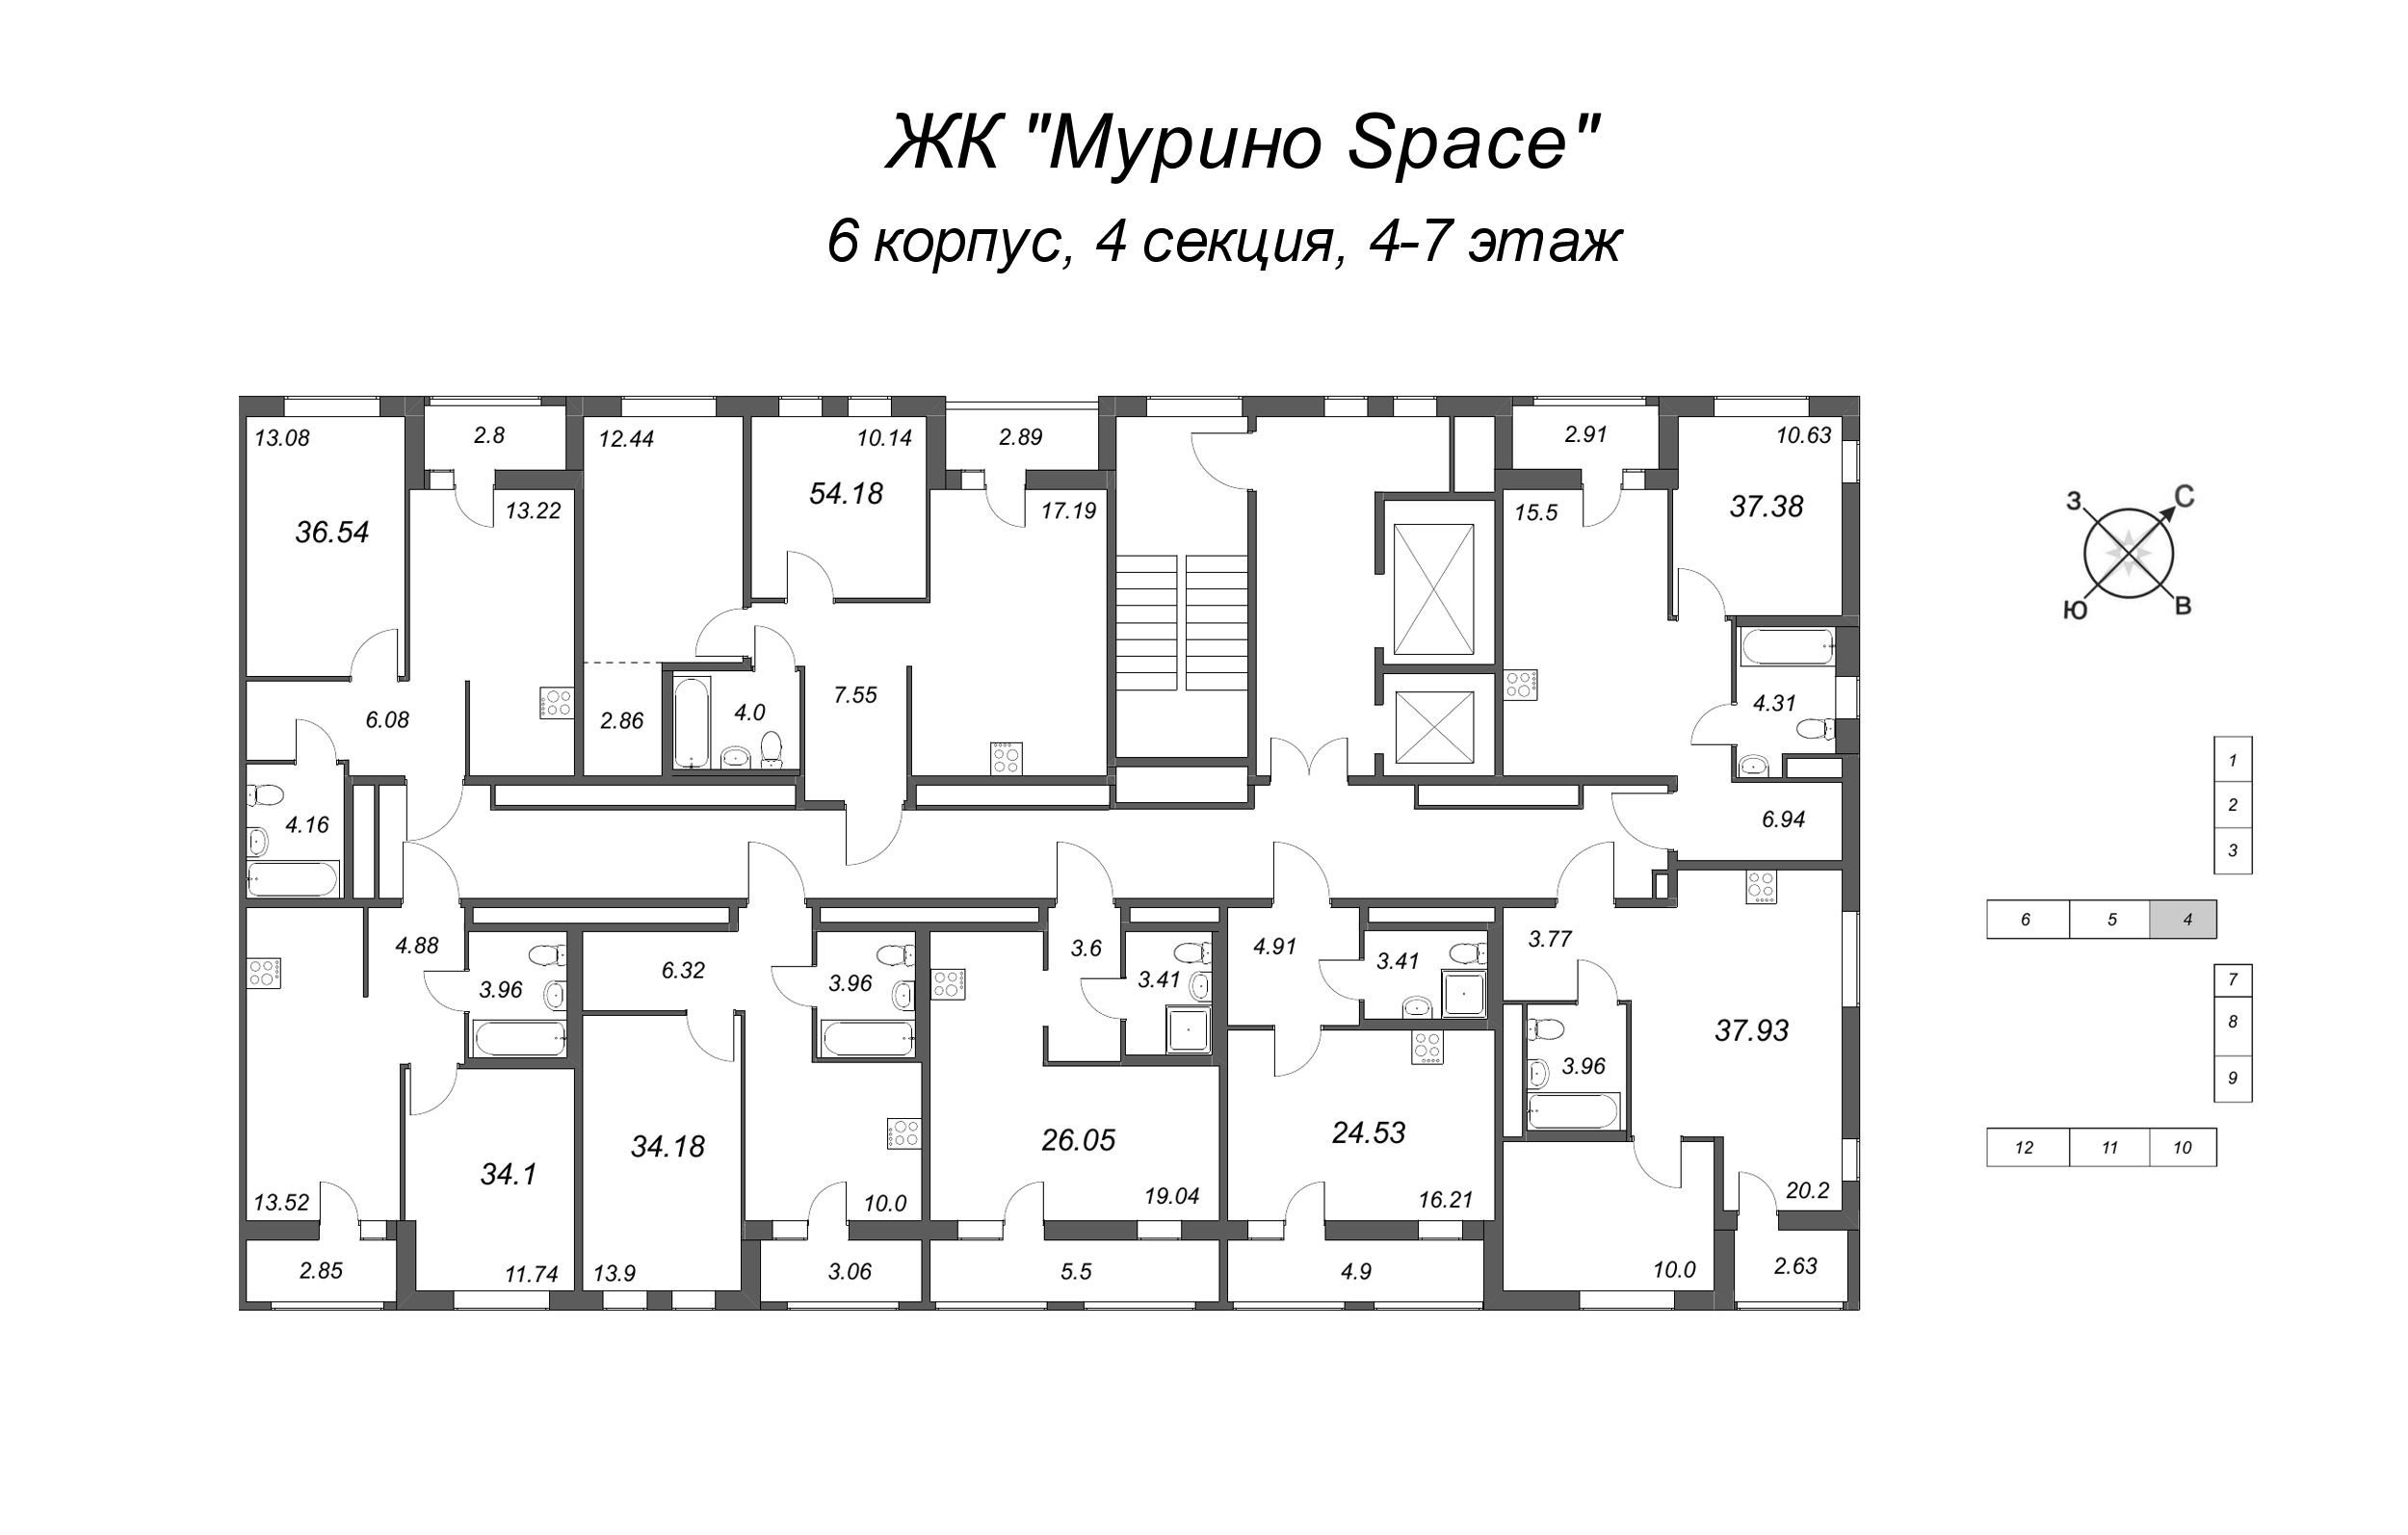 2-комнатная (Евро) квартира, 37.38 м² - планировка этажа